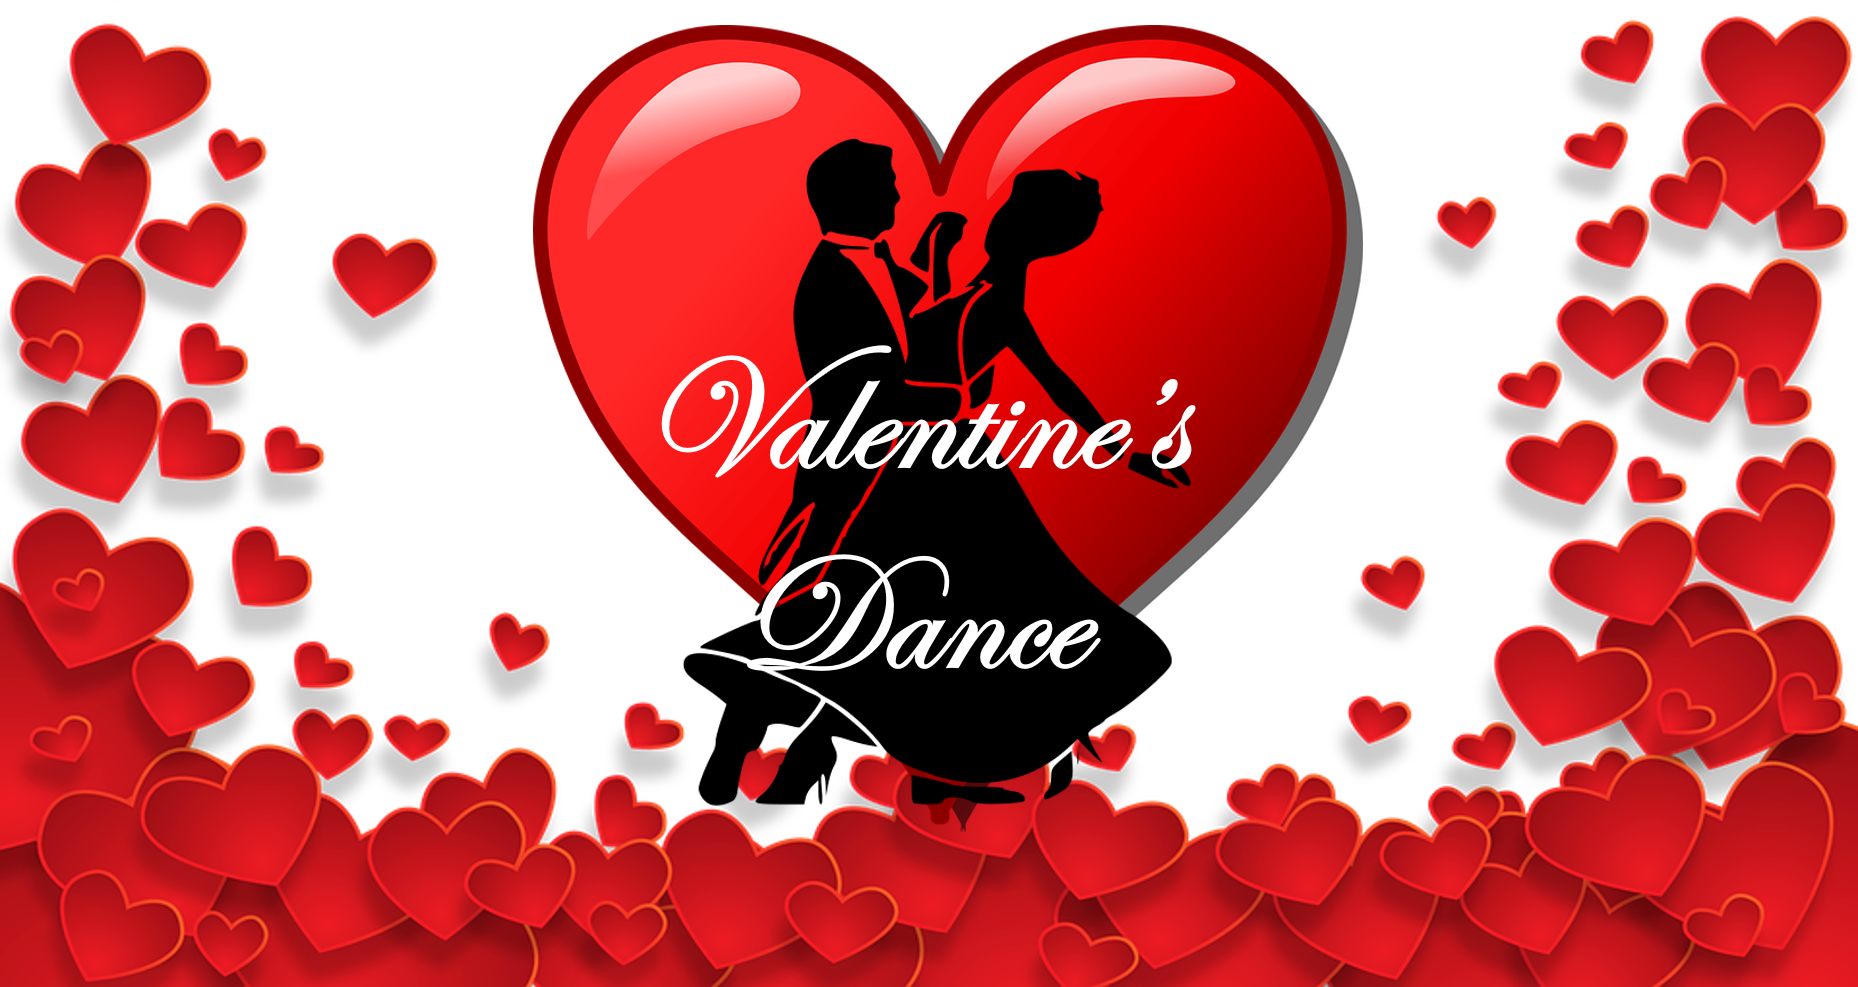 Valentine's Dance Social Dance Events